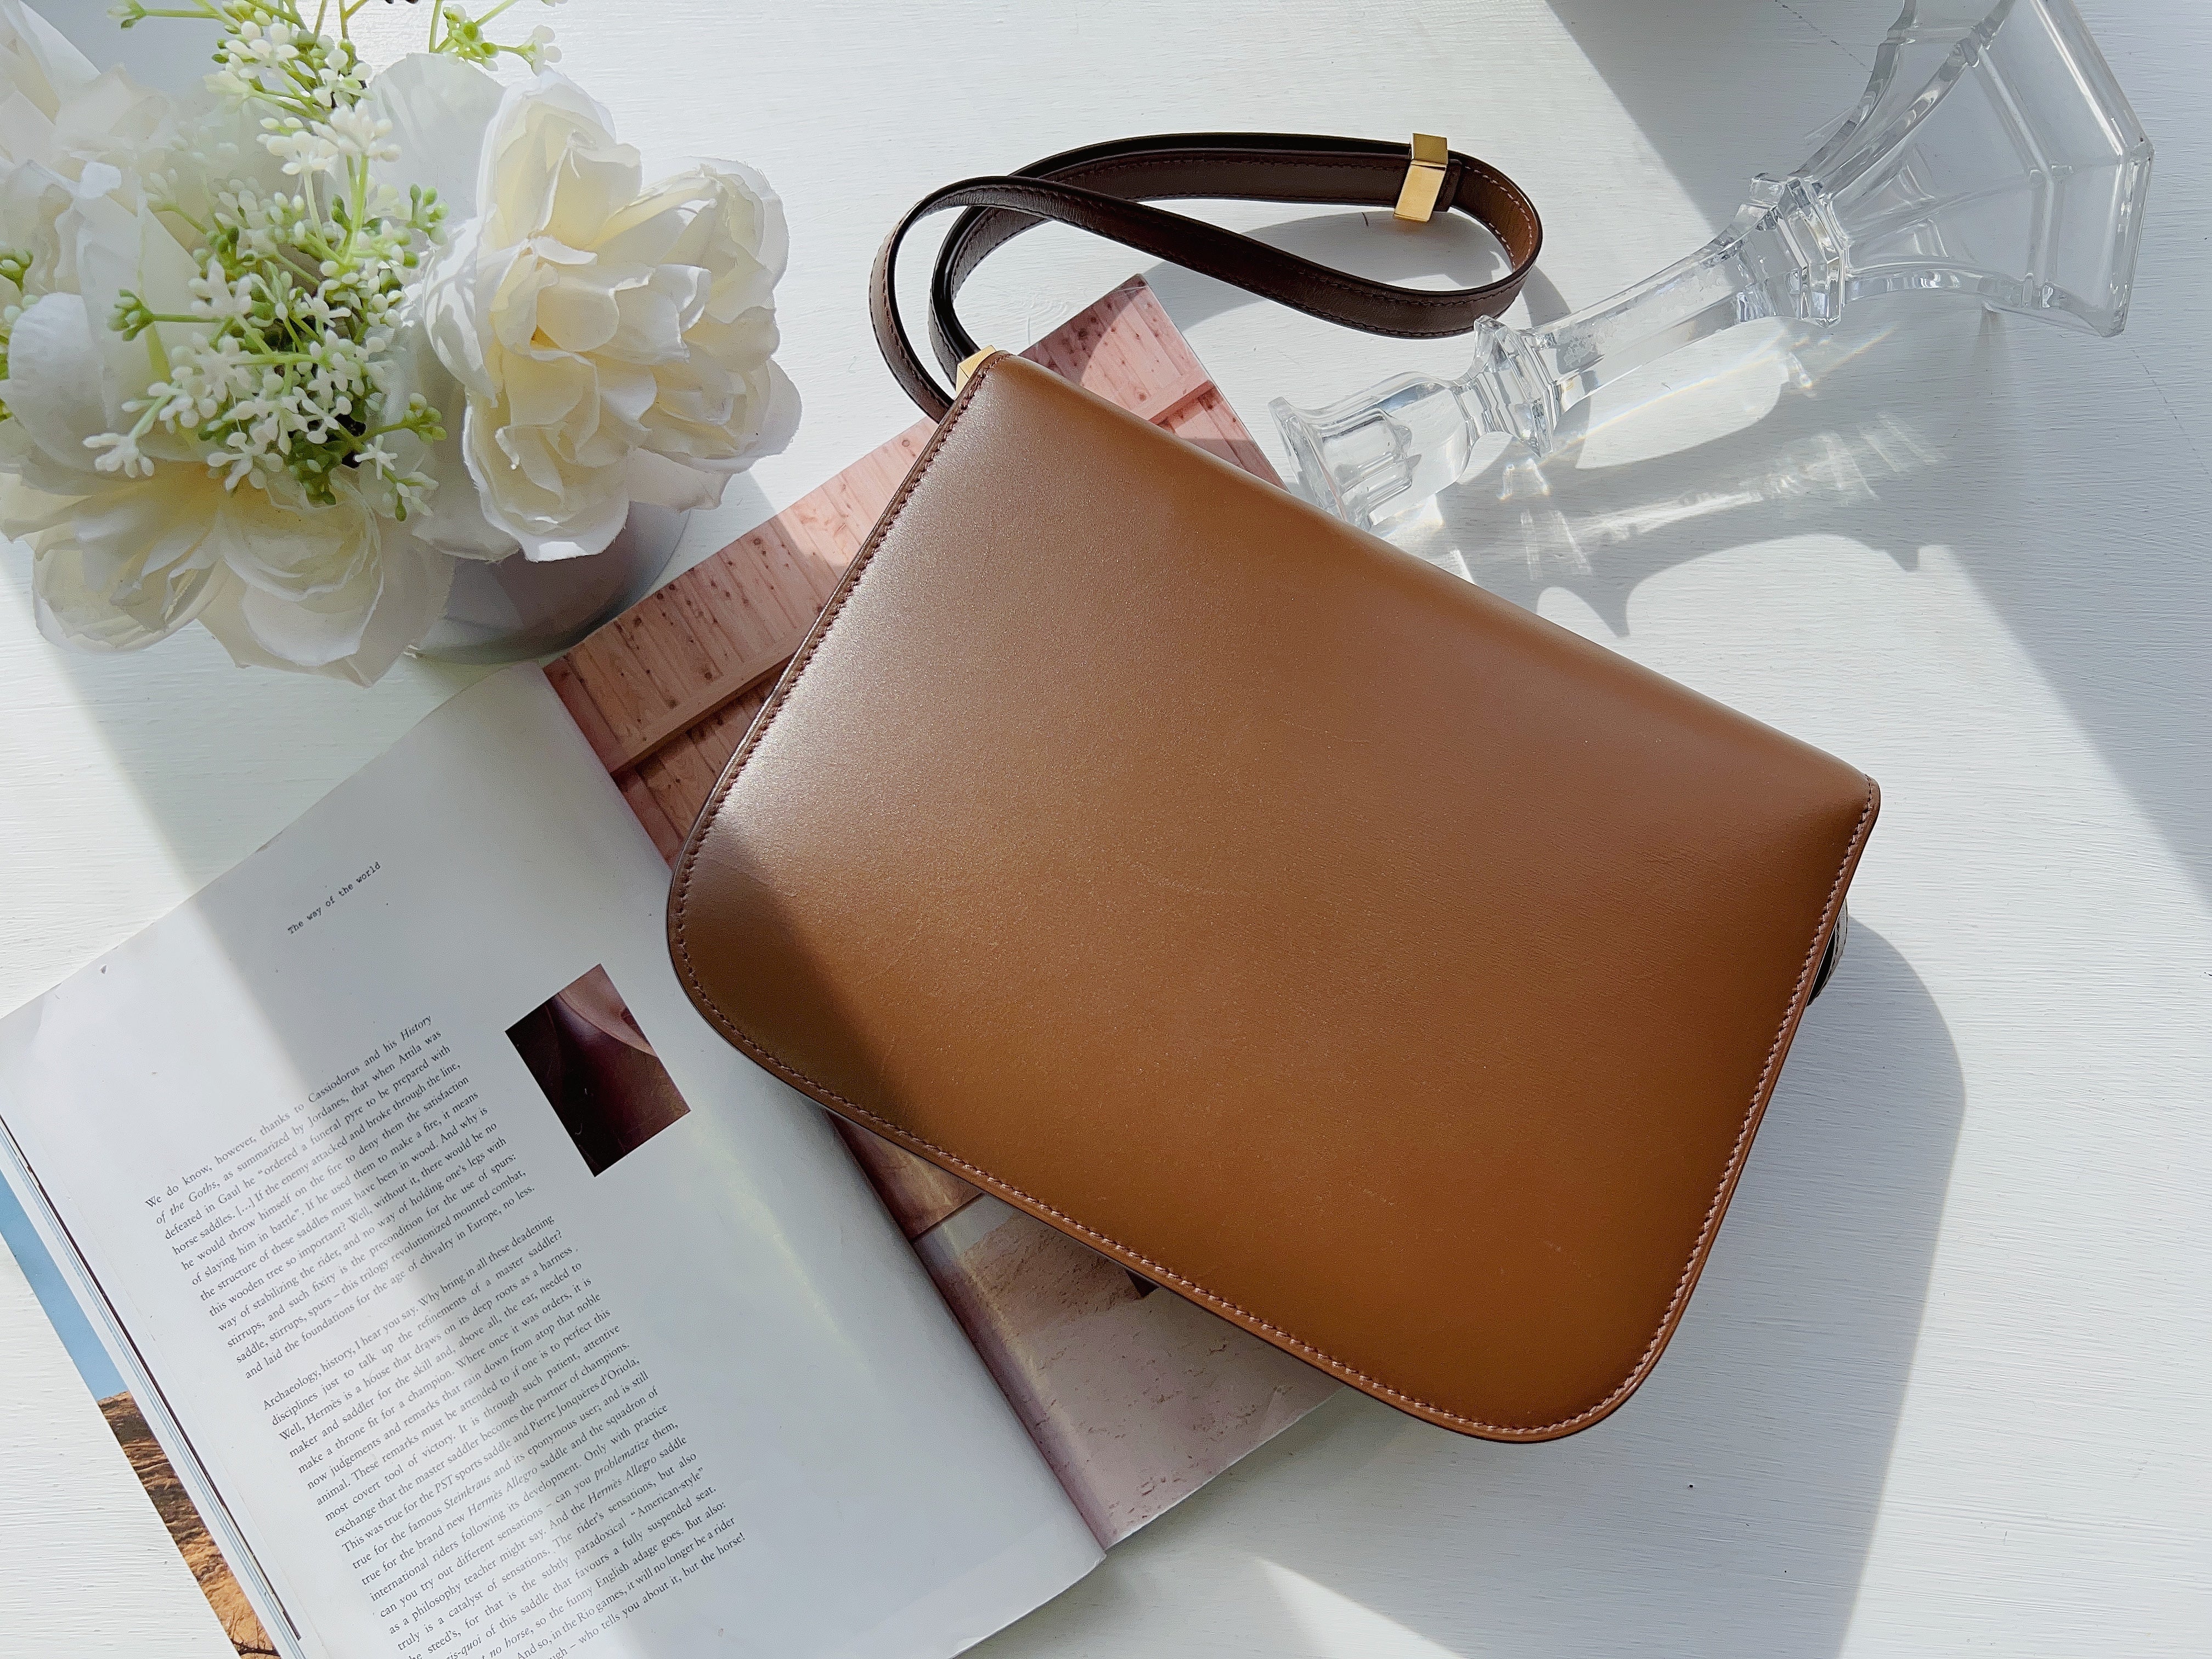 Celine 'Teen Box' Bag | Fashionably Yours